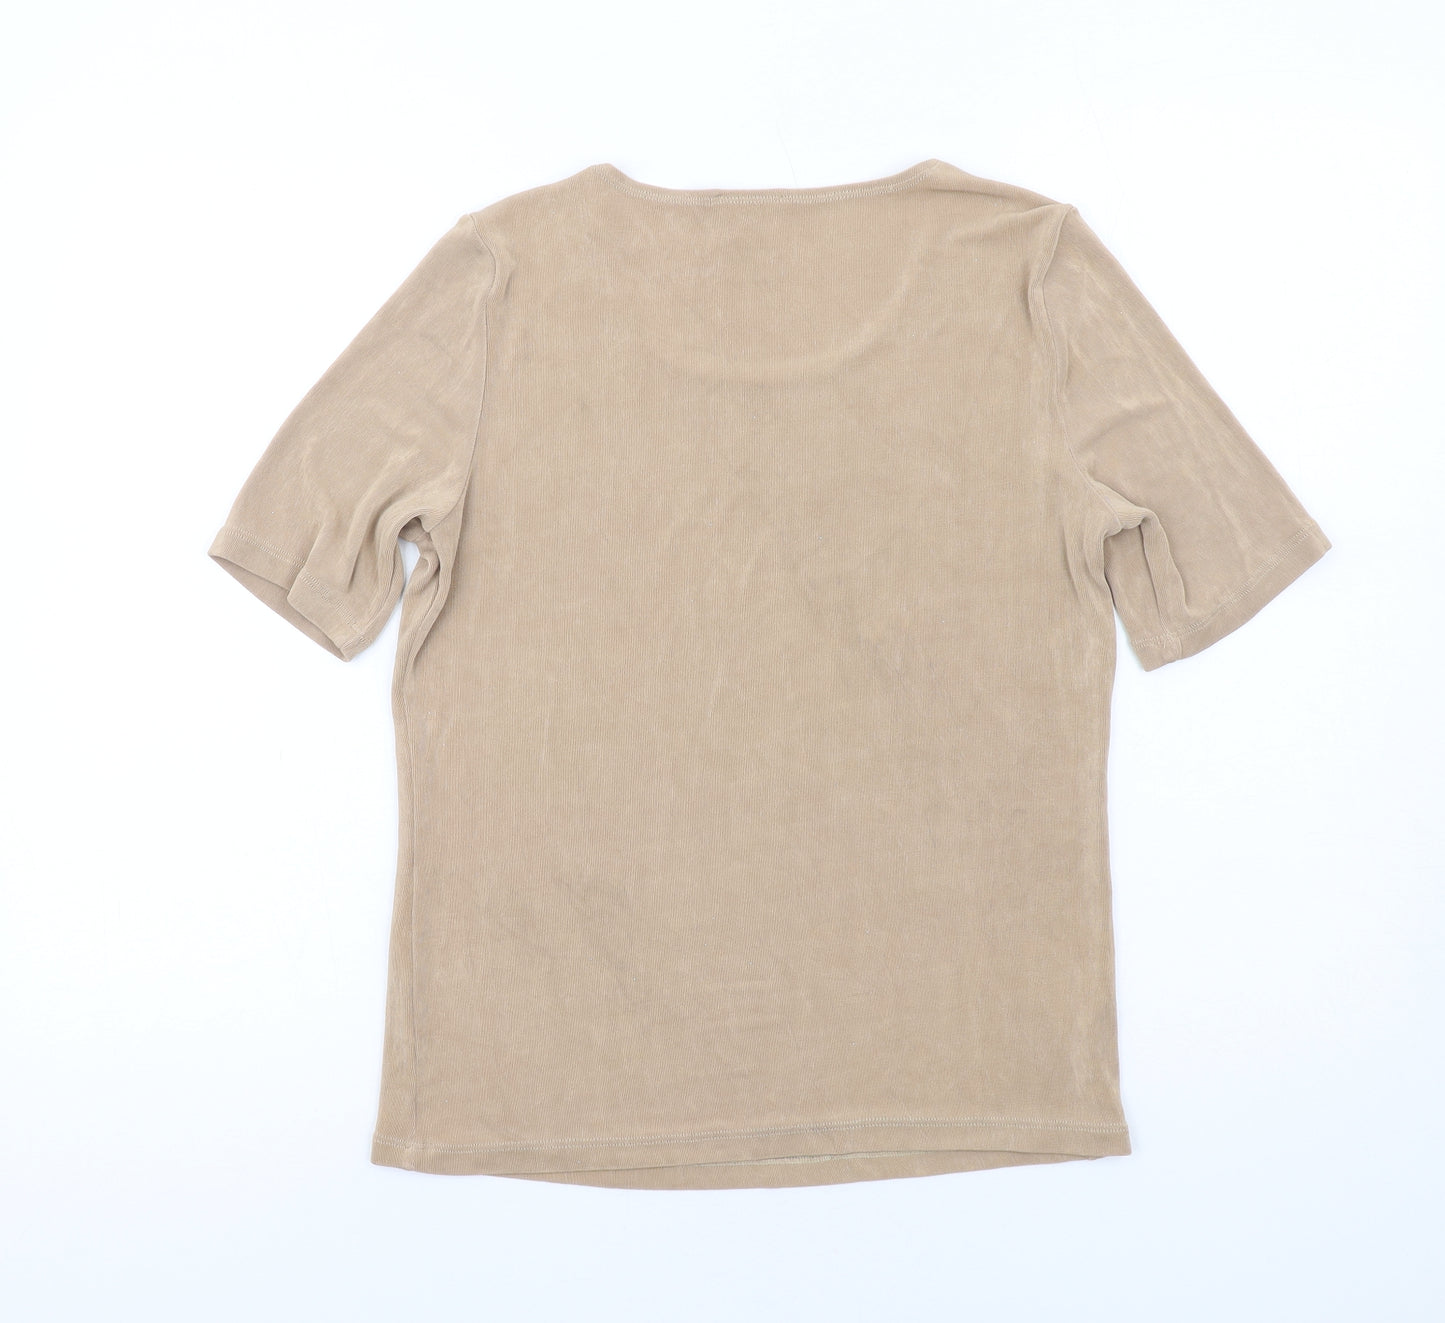 Kim&Co Womens Beige Polyester Basic T-Shirt Size M Round Neck